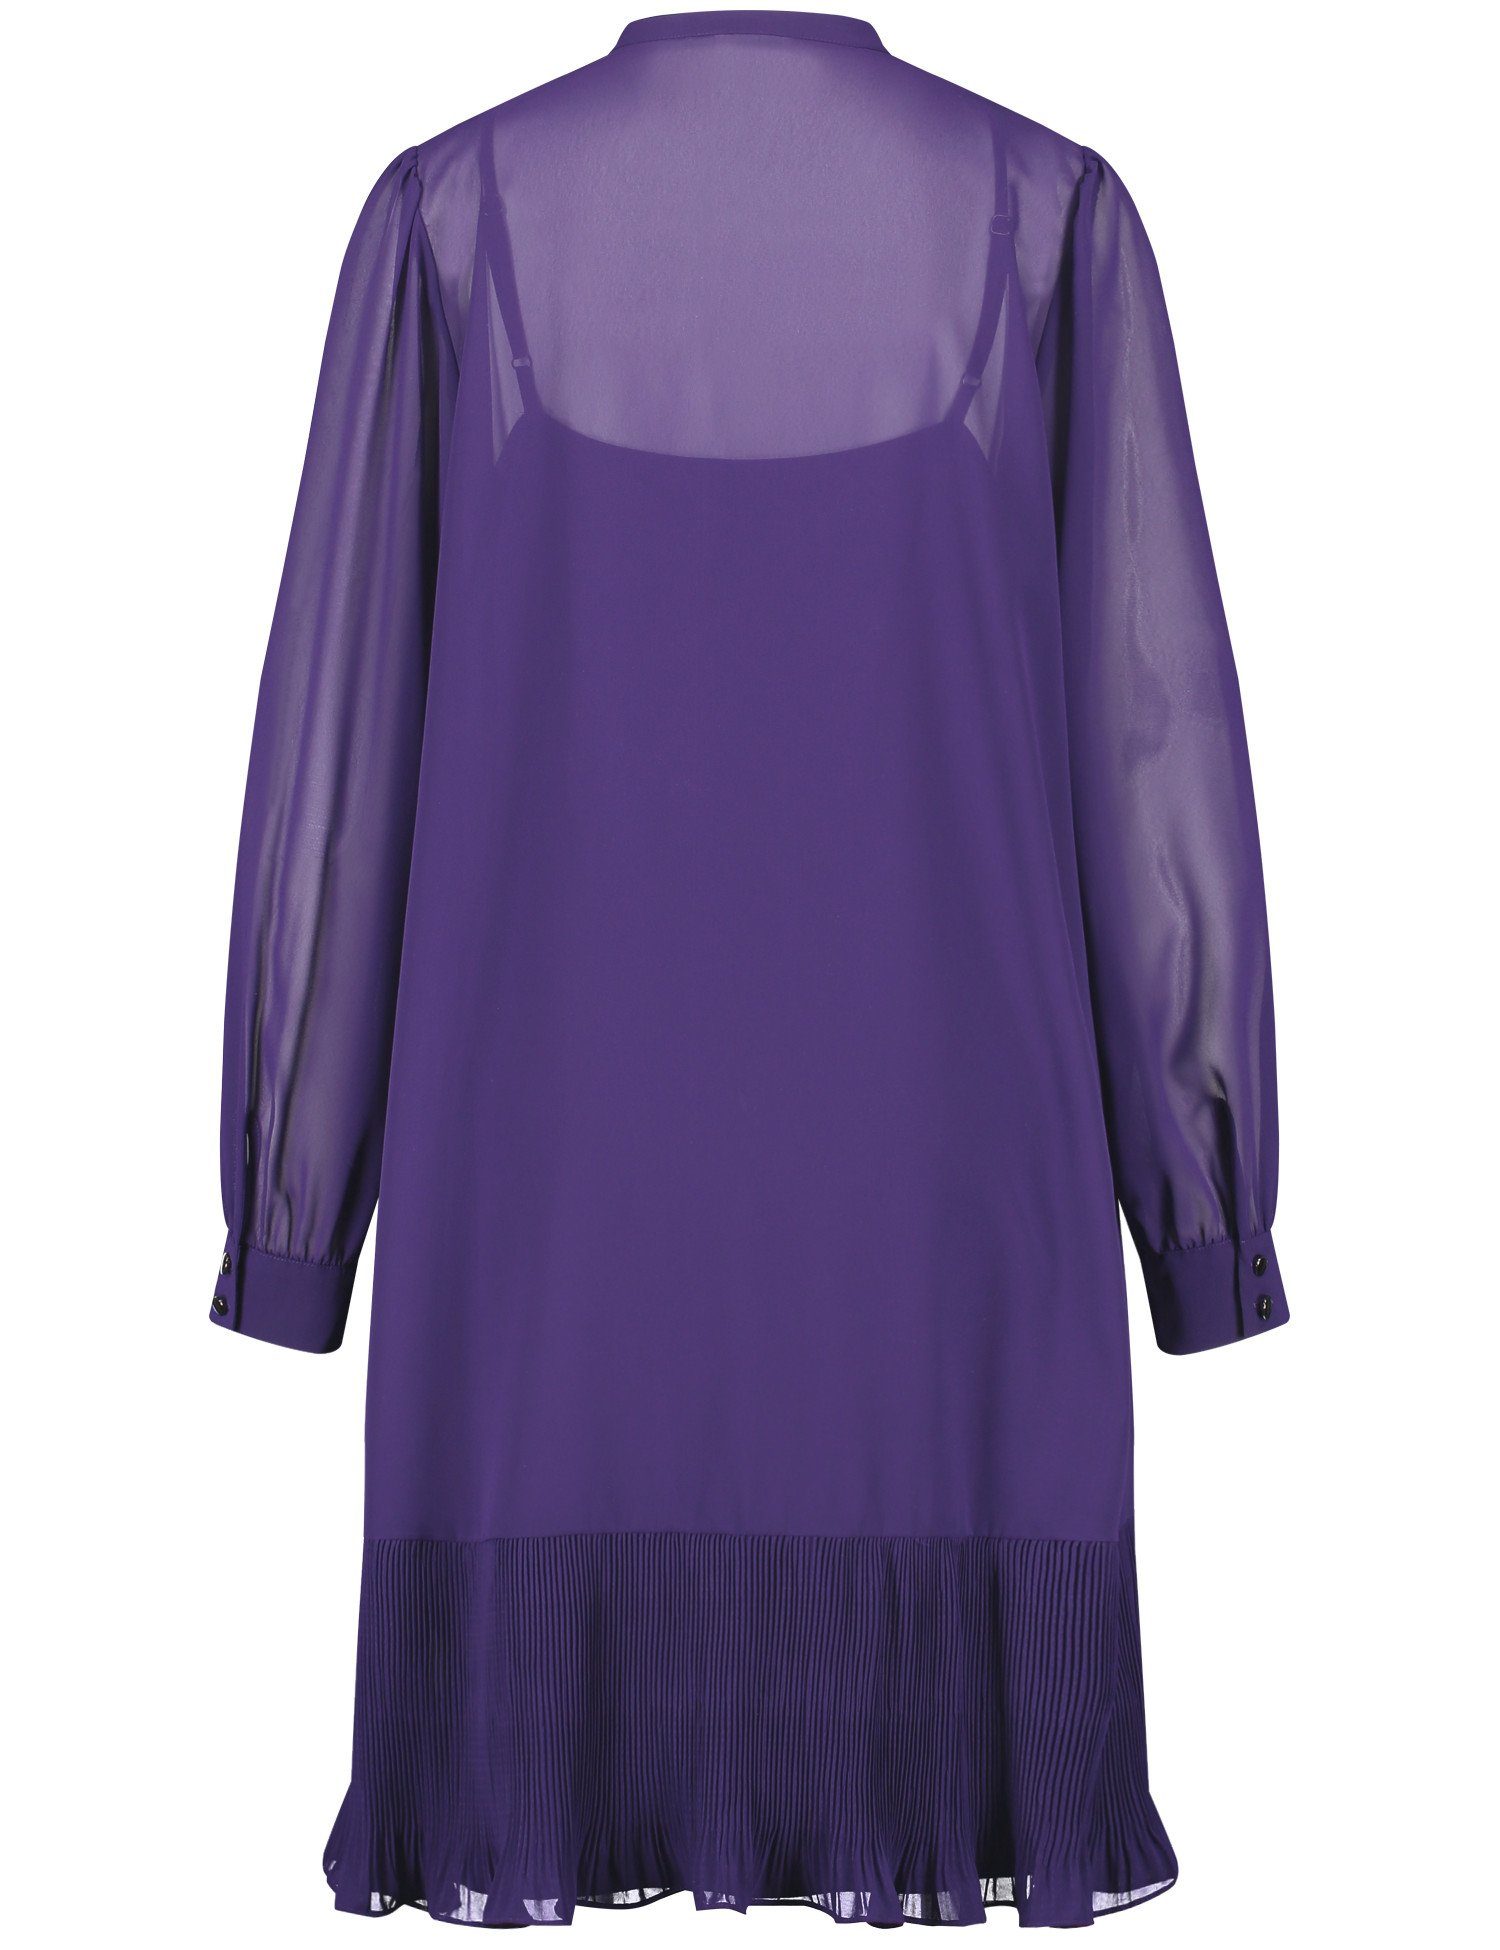 GERRY Overlayer Kleid Zartes Violet Dark Midikleid WEBER mit semitransparentem